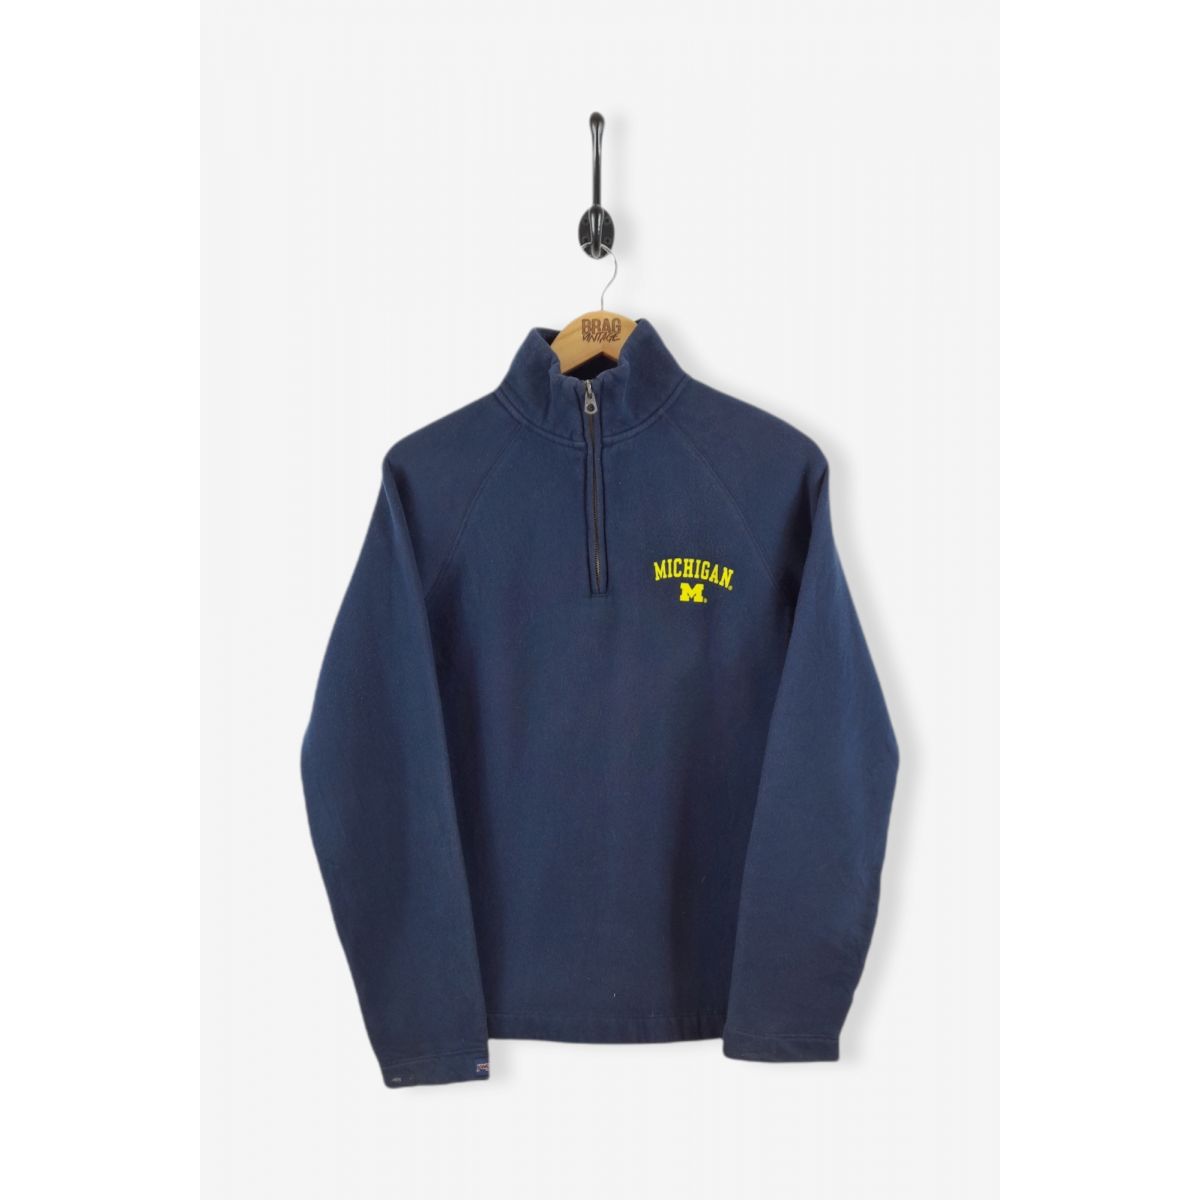 Vintage Michigan 1/4 Zip Pullover Sweatshirt Navy Blue Medium